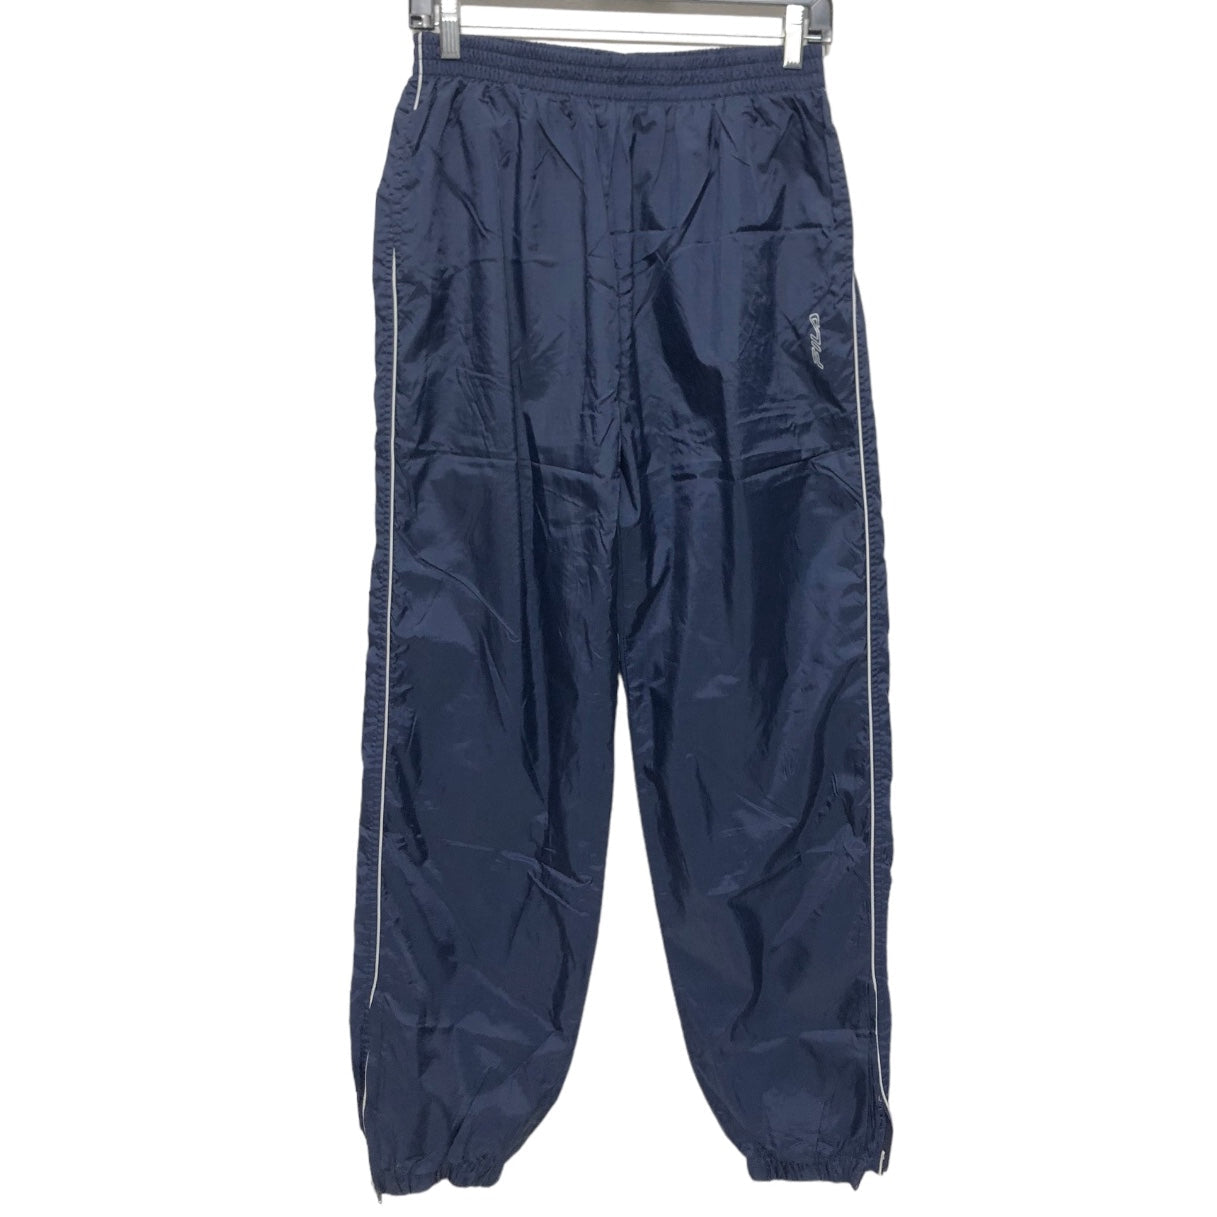 Athletic Pants By Fila  Size: L